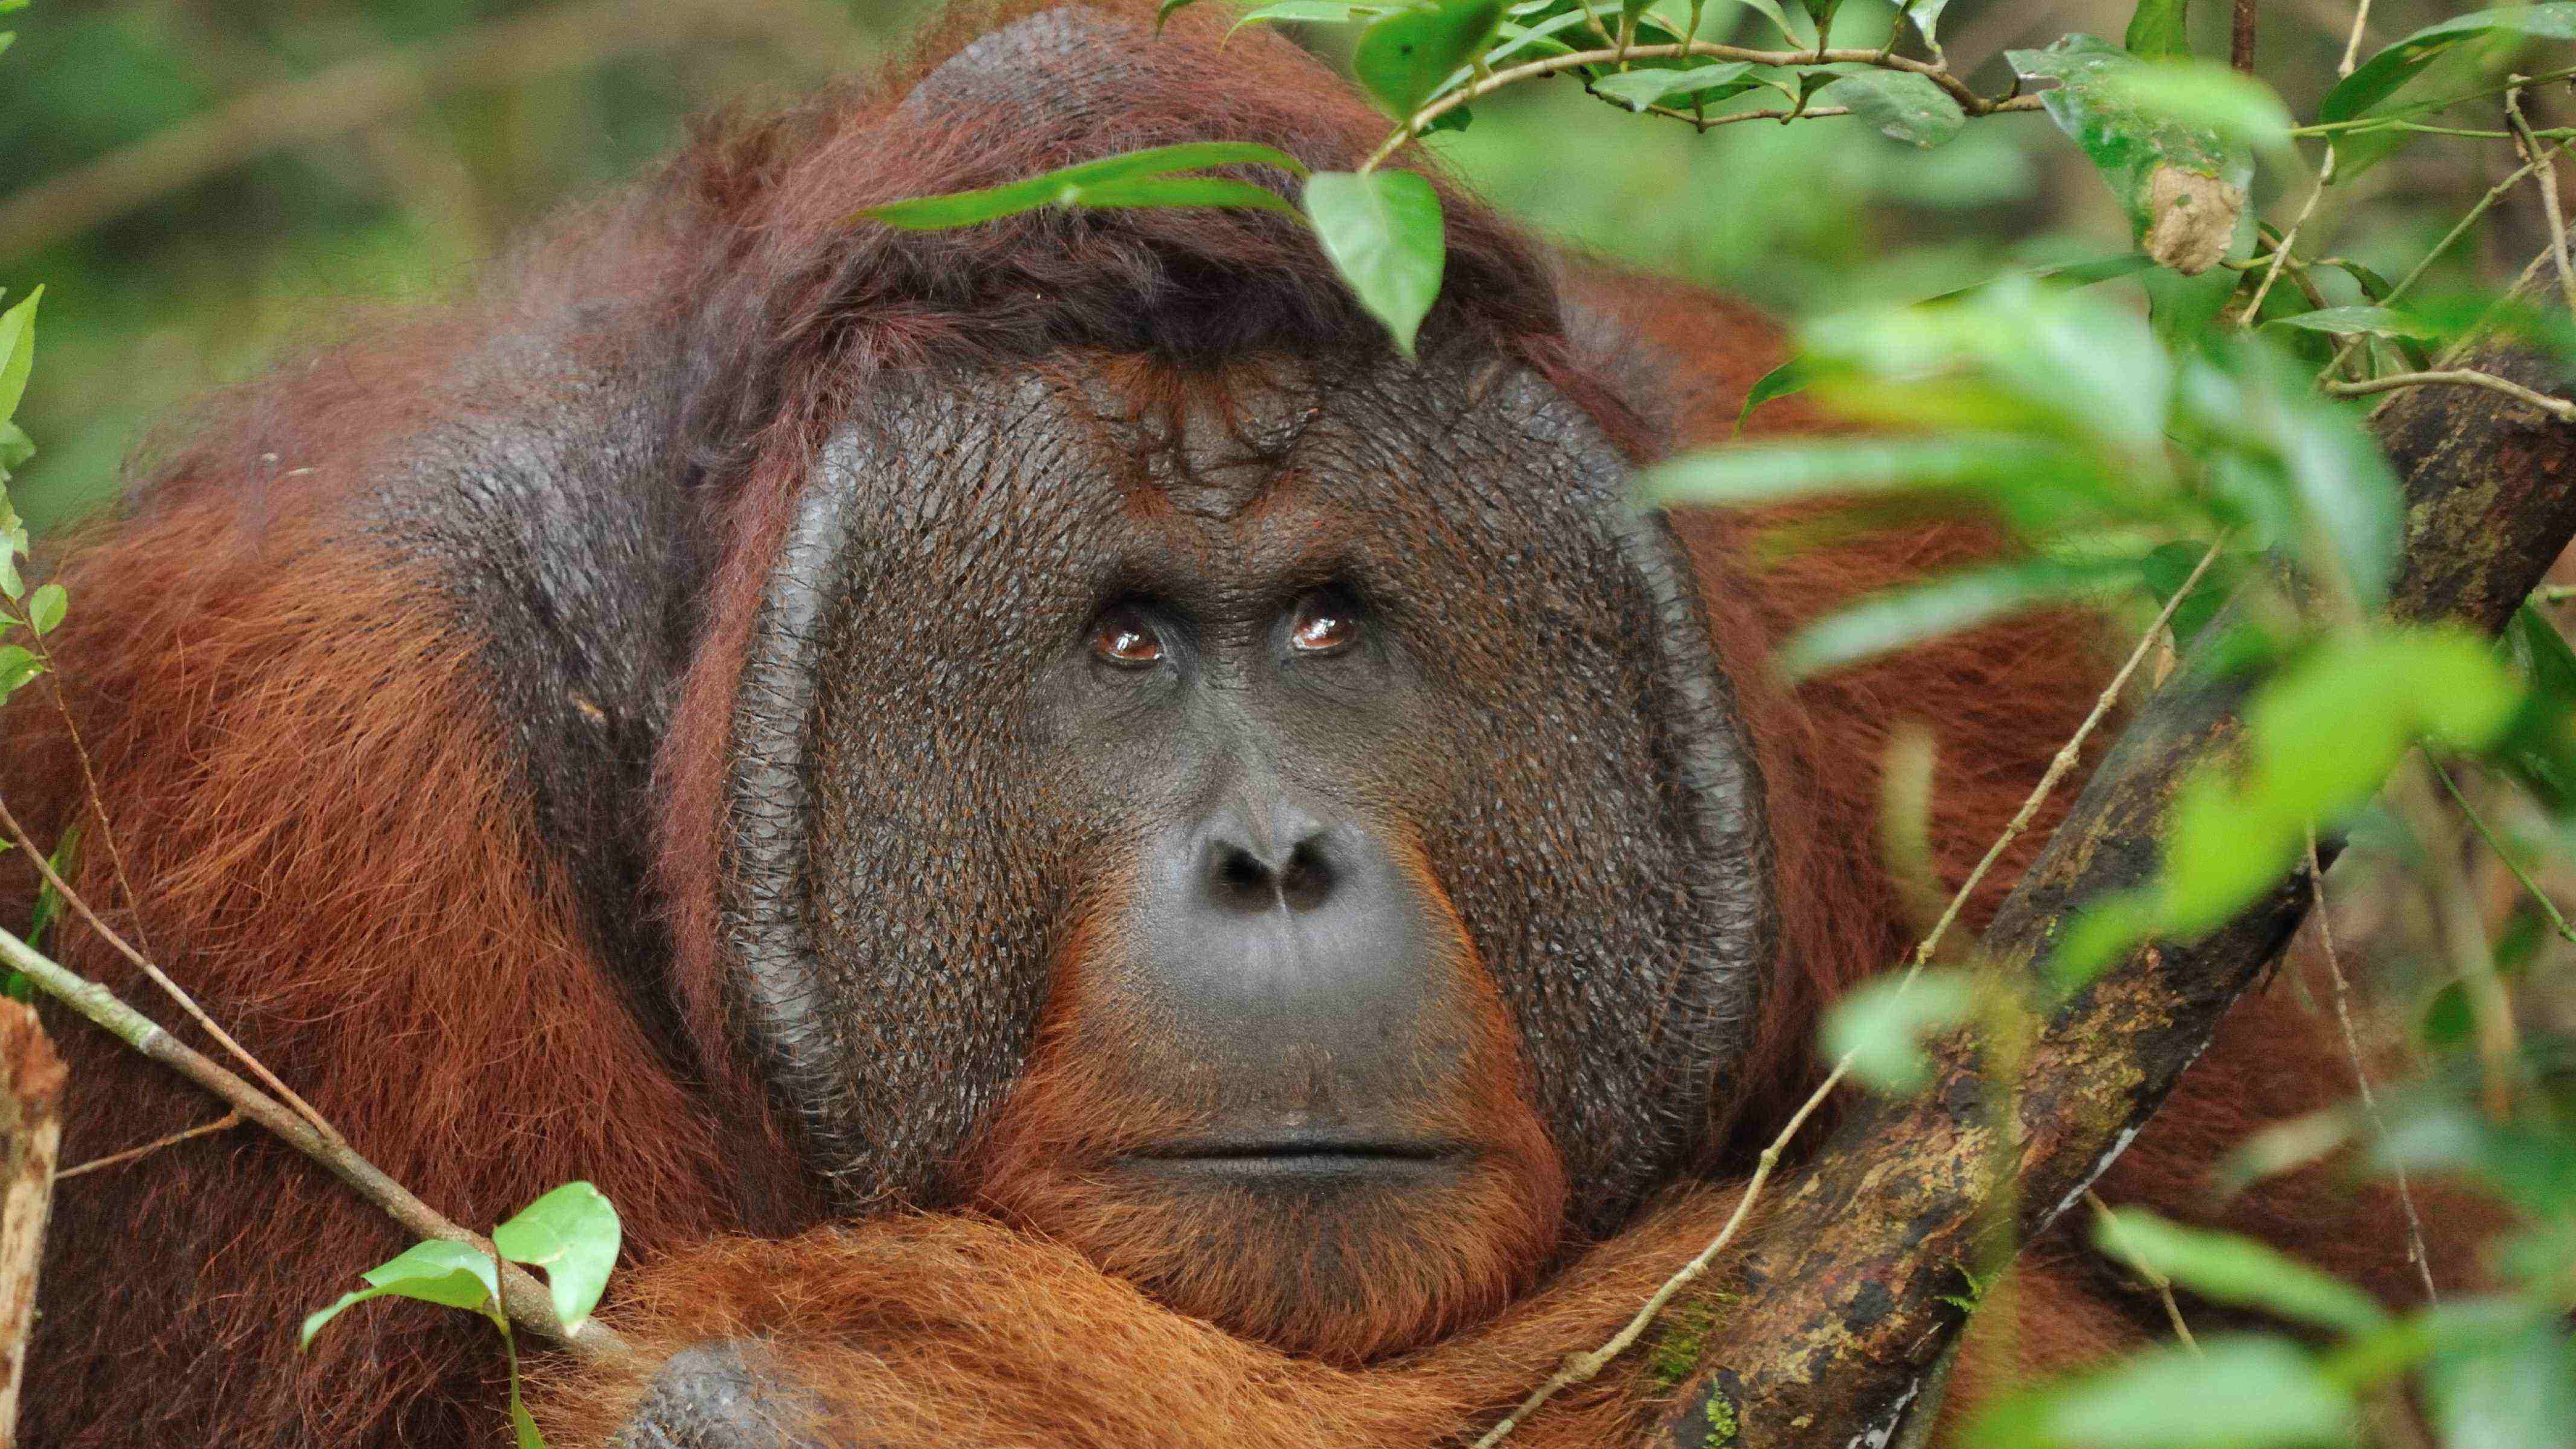 orangutan, orang hutan, wildlife, jungle, kalimantan, borneo, indonesia, guide, tour, trek, trip, travel, forest, rain forest, dayak